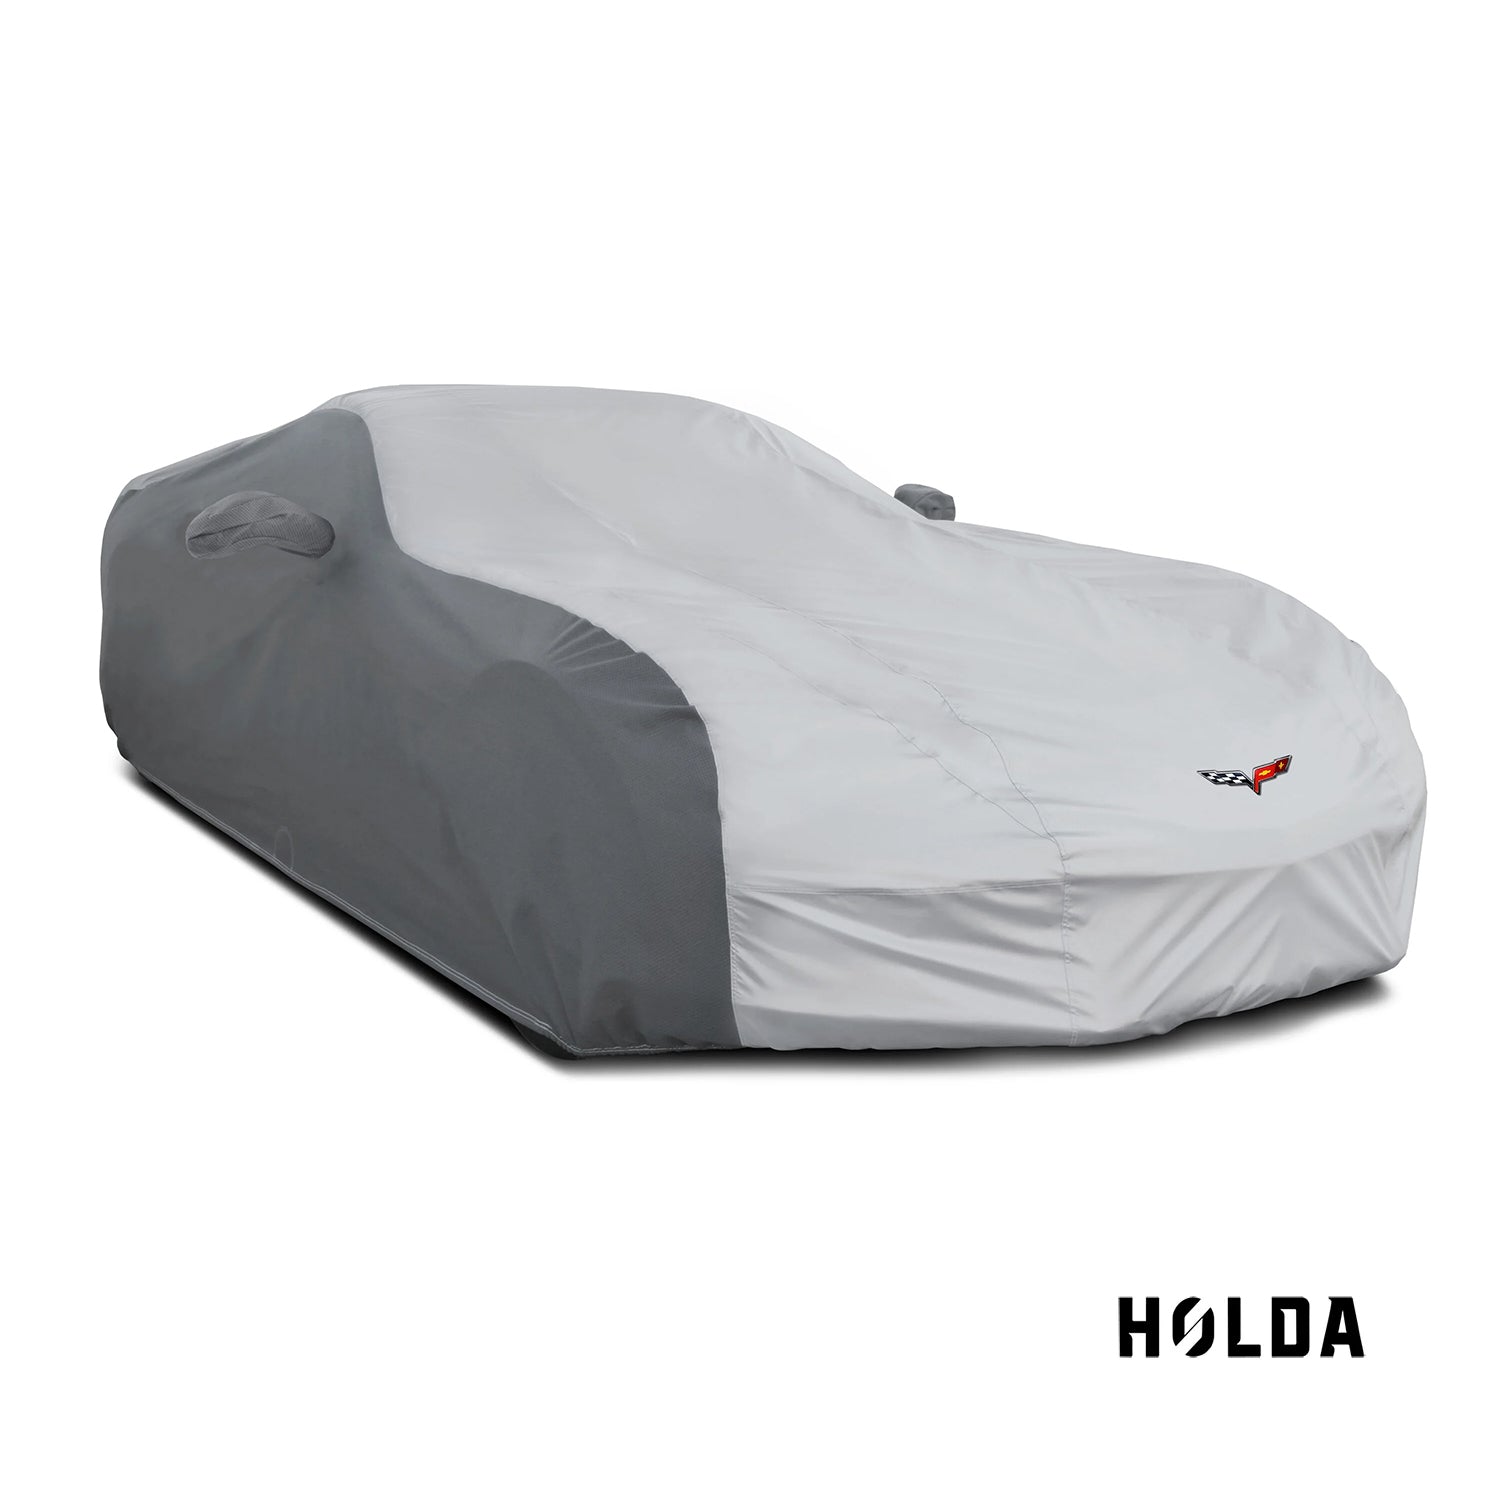 Holda LLC Hybrid Car Cover for Corvette C5 to C7 Corvette - Partsaccessoriesusa